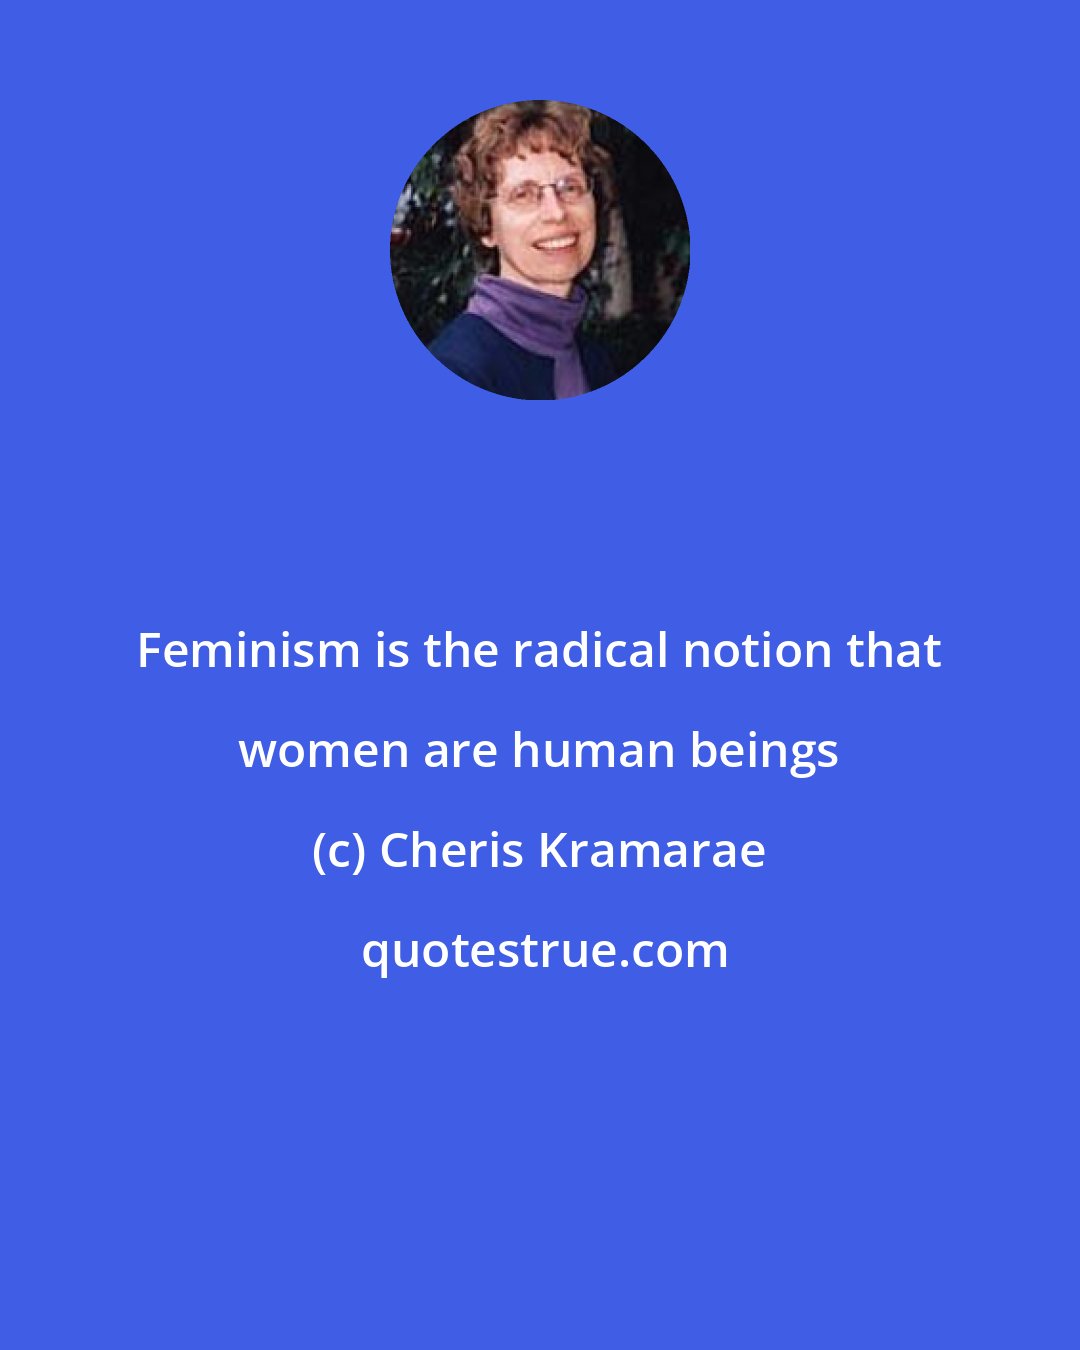 Cheris Kramarae: Feminism is the radical notion that women are human beings